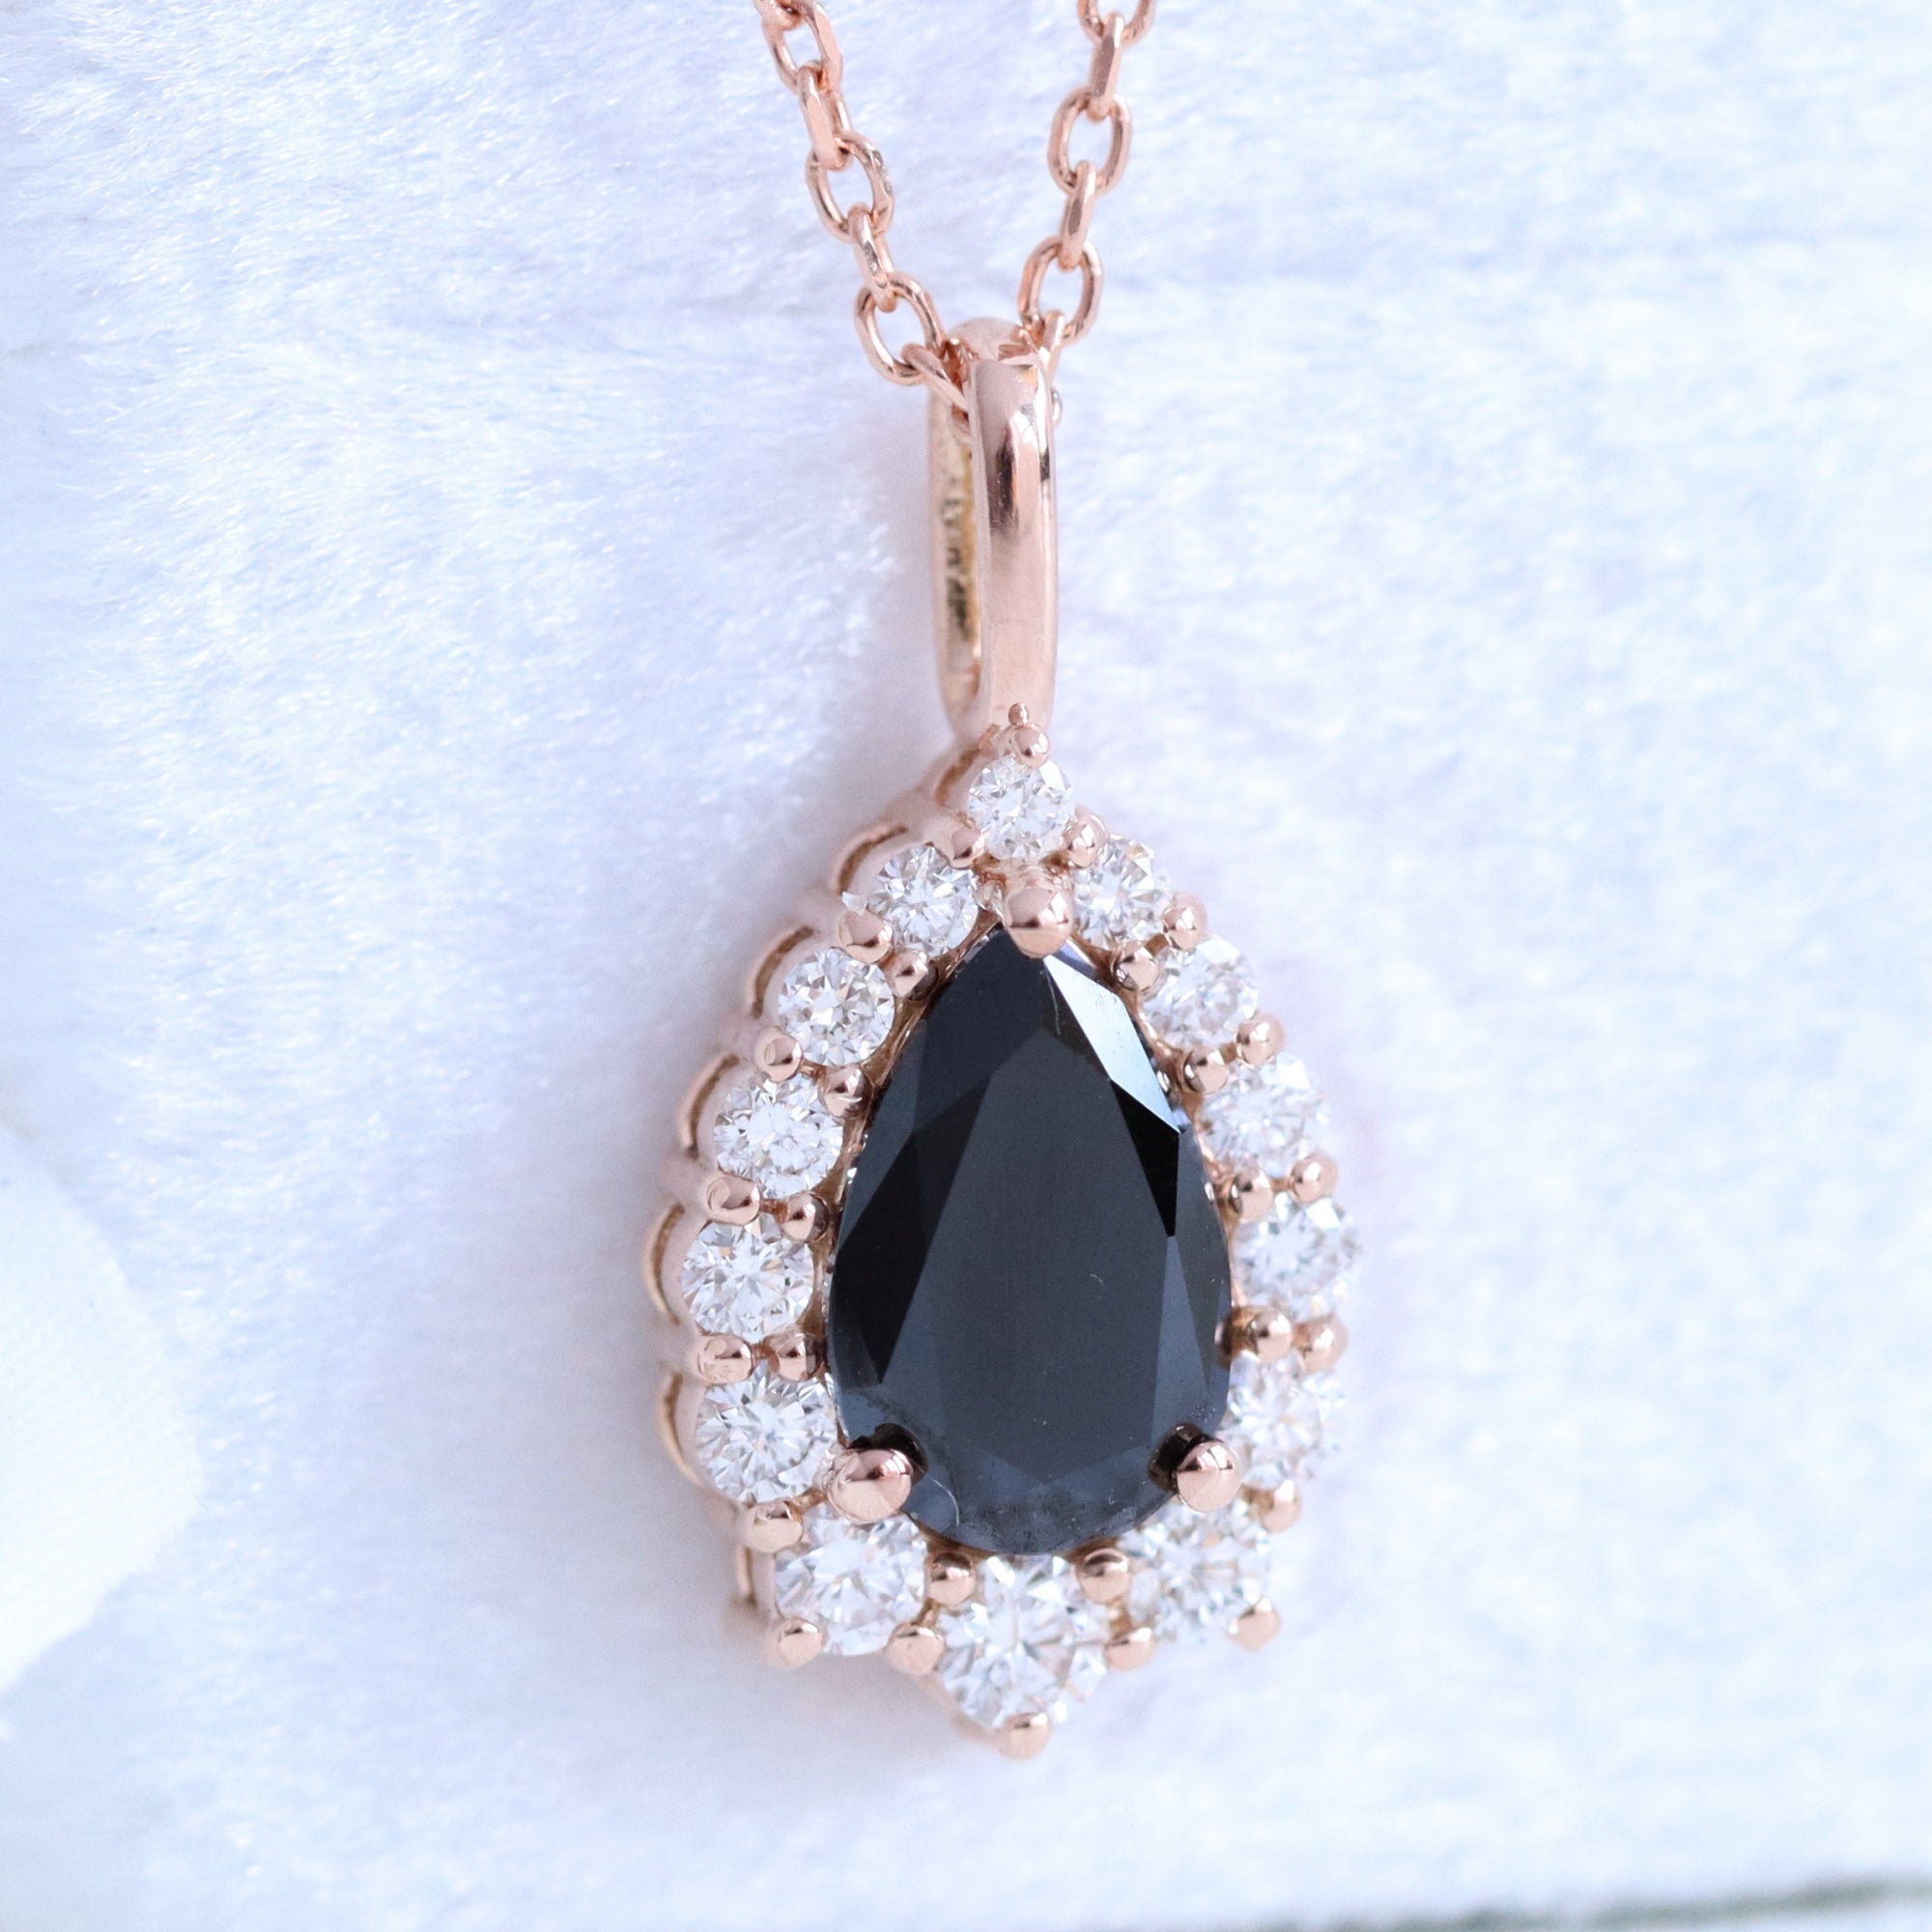 Pear black diamond necklace rose gold halo style black diamond drop pendant necklace la more design jewelry